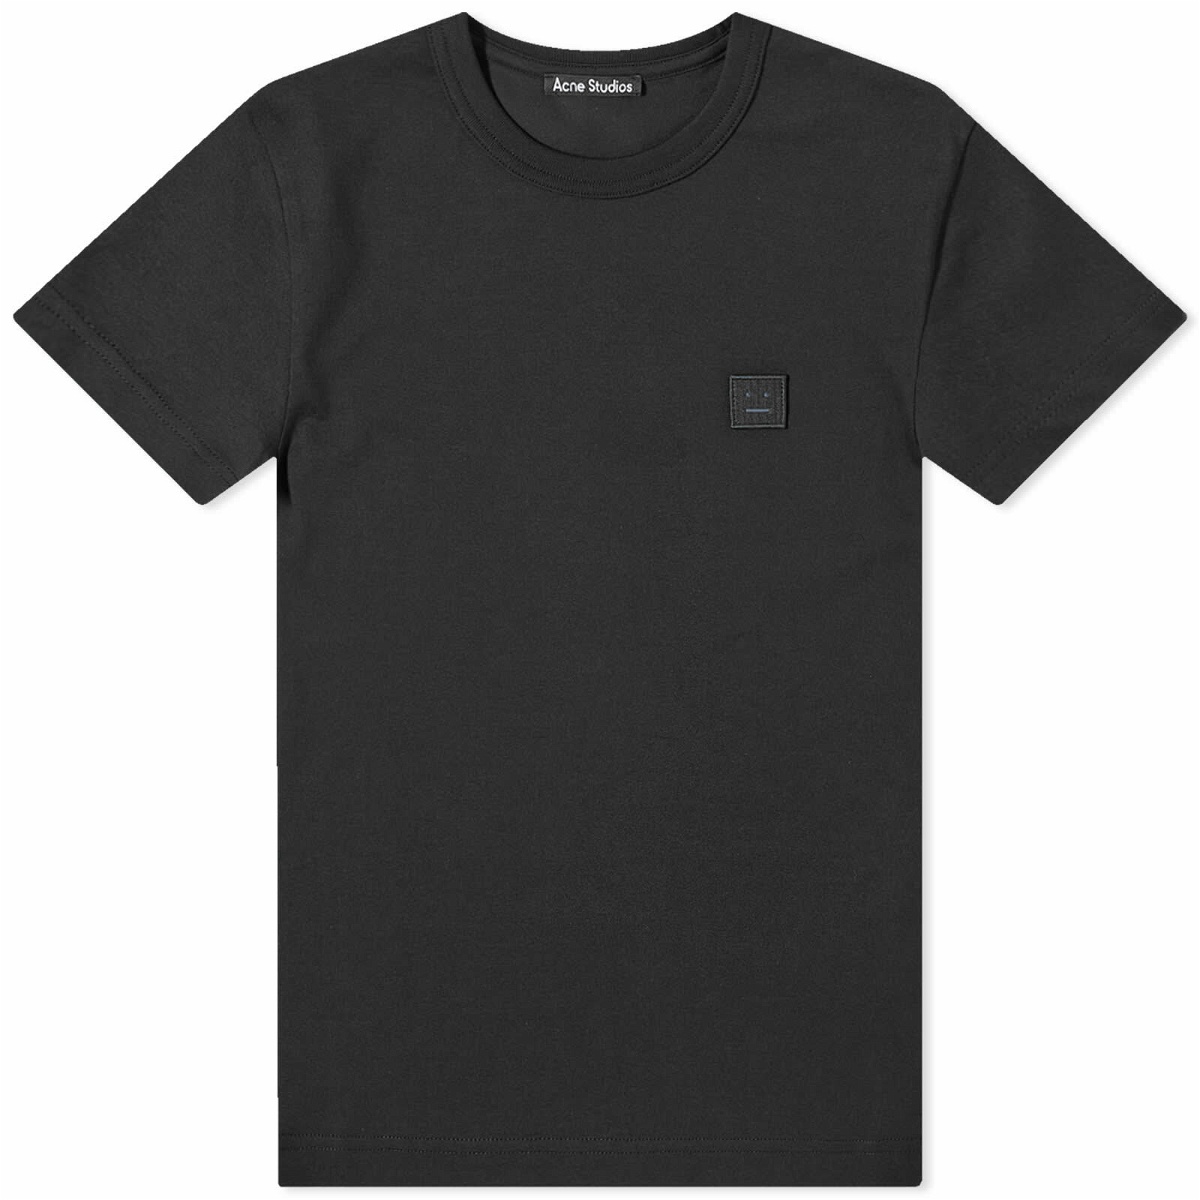 Acne Studios Exford Face T-Shirt in Black Acne Studios